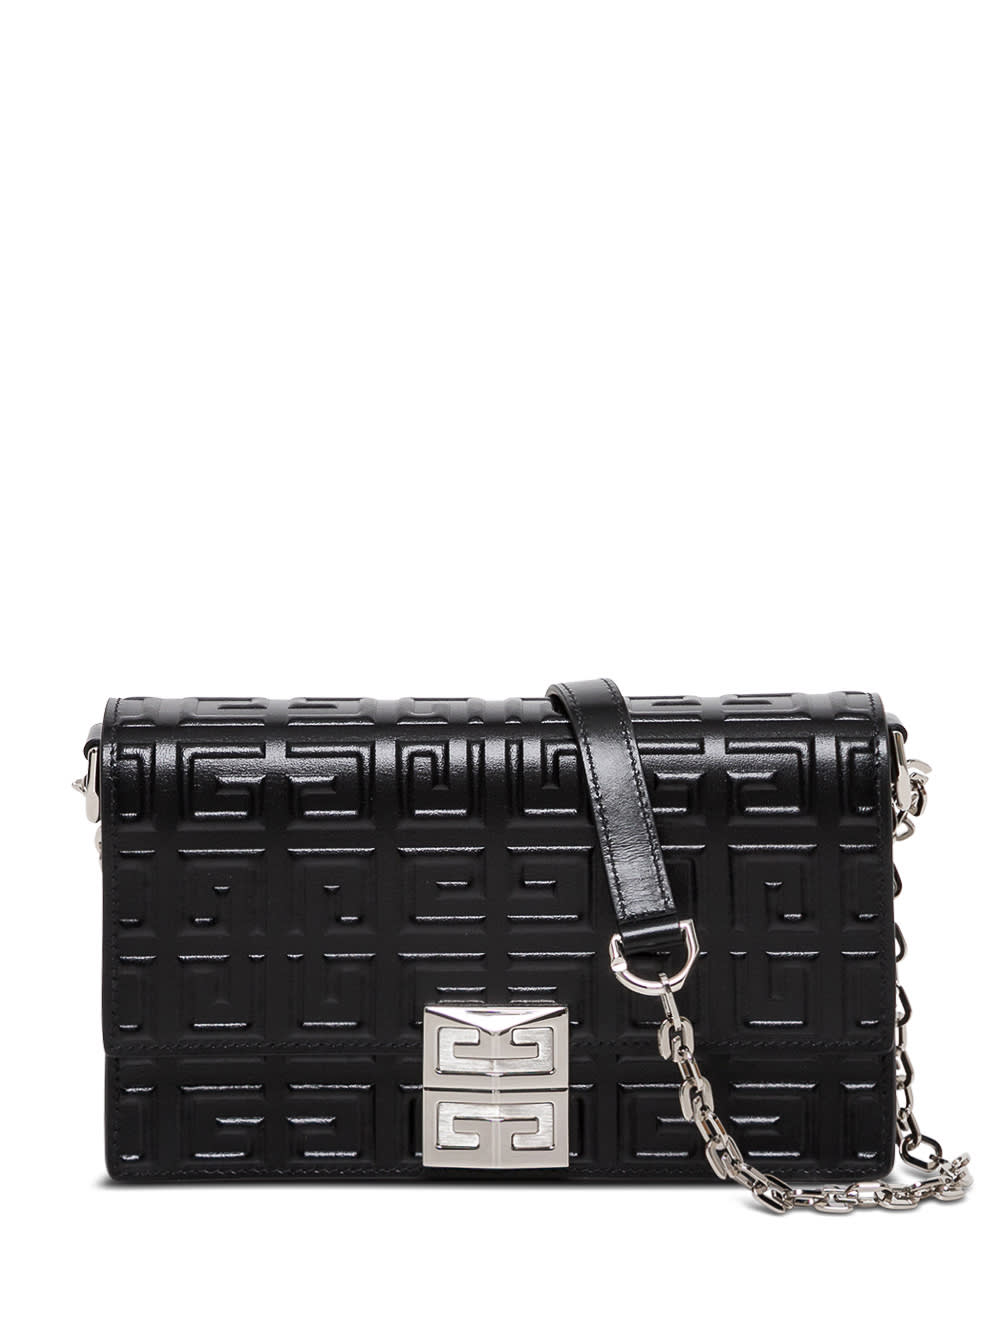 Givenchy 4g Mini Chain Black Leather Crossbody Bag